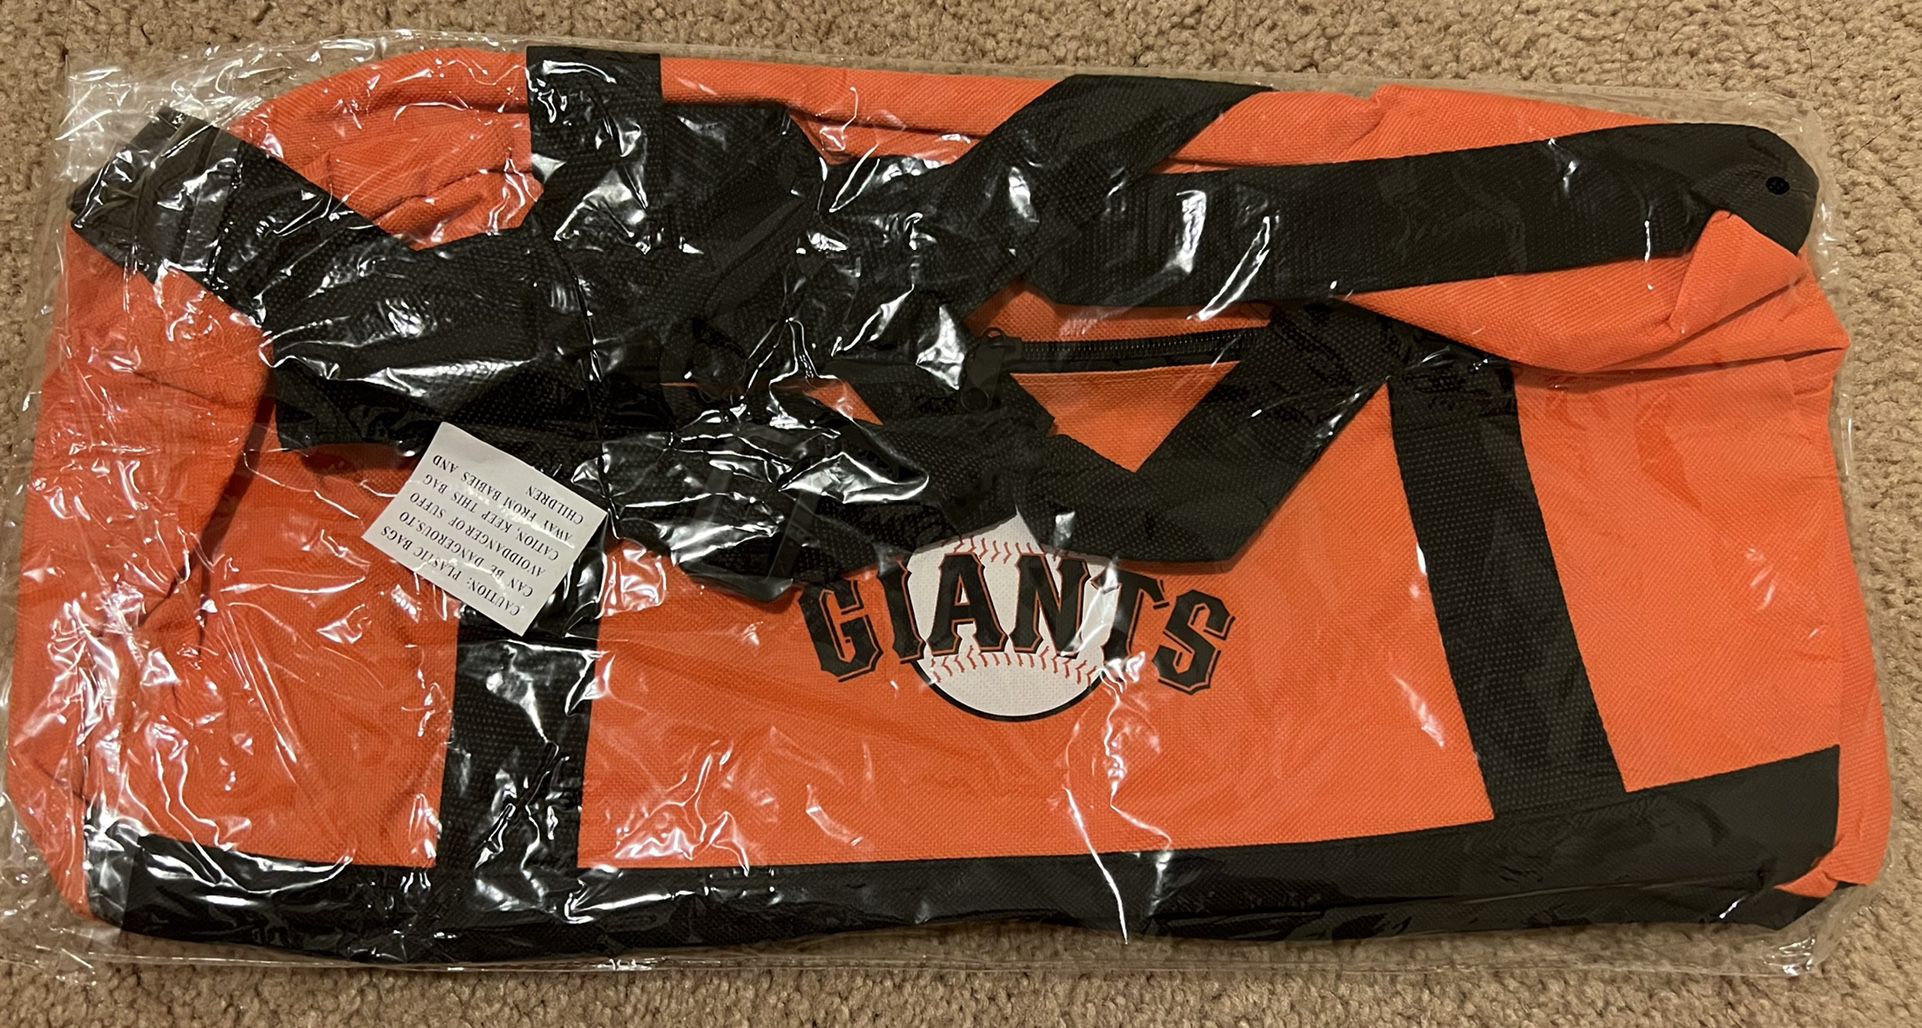 San Francisco SF Giants Sga Orange Duffle Bag By Dasani